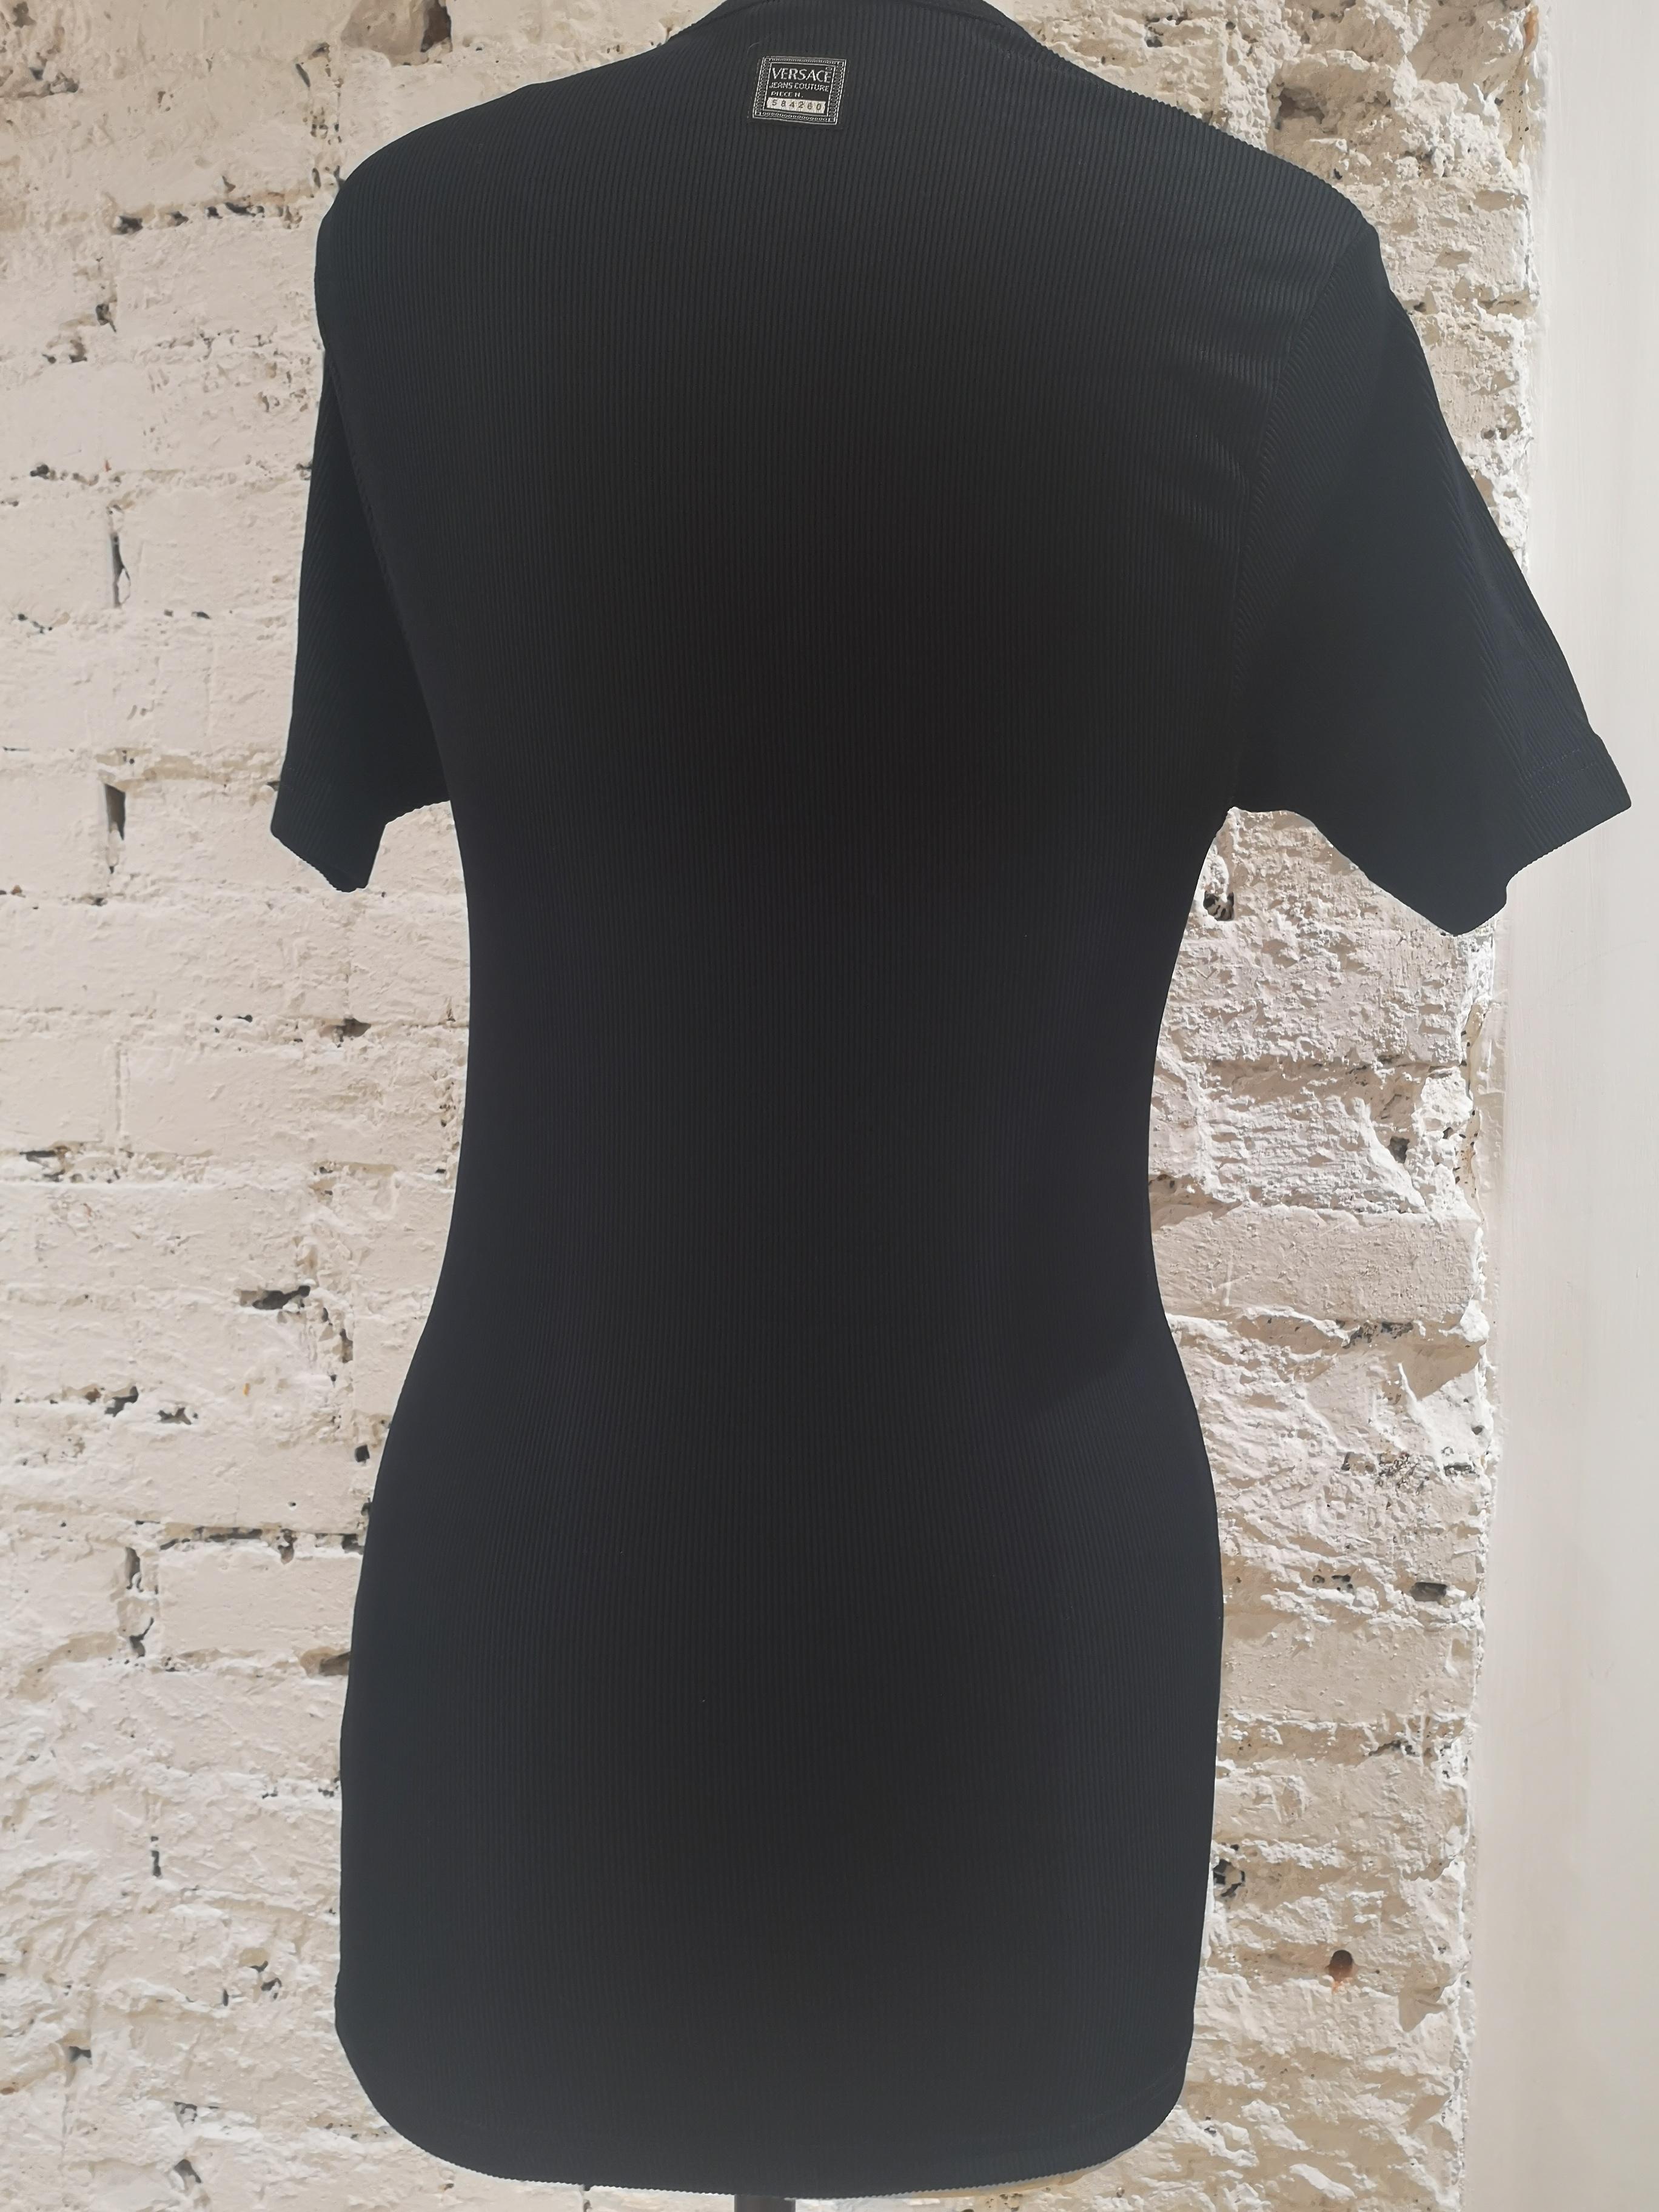 Versace black nylon long t-shirt For Sale 1